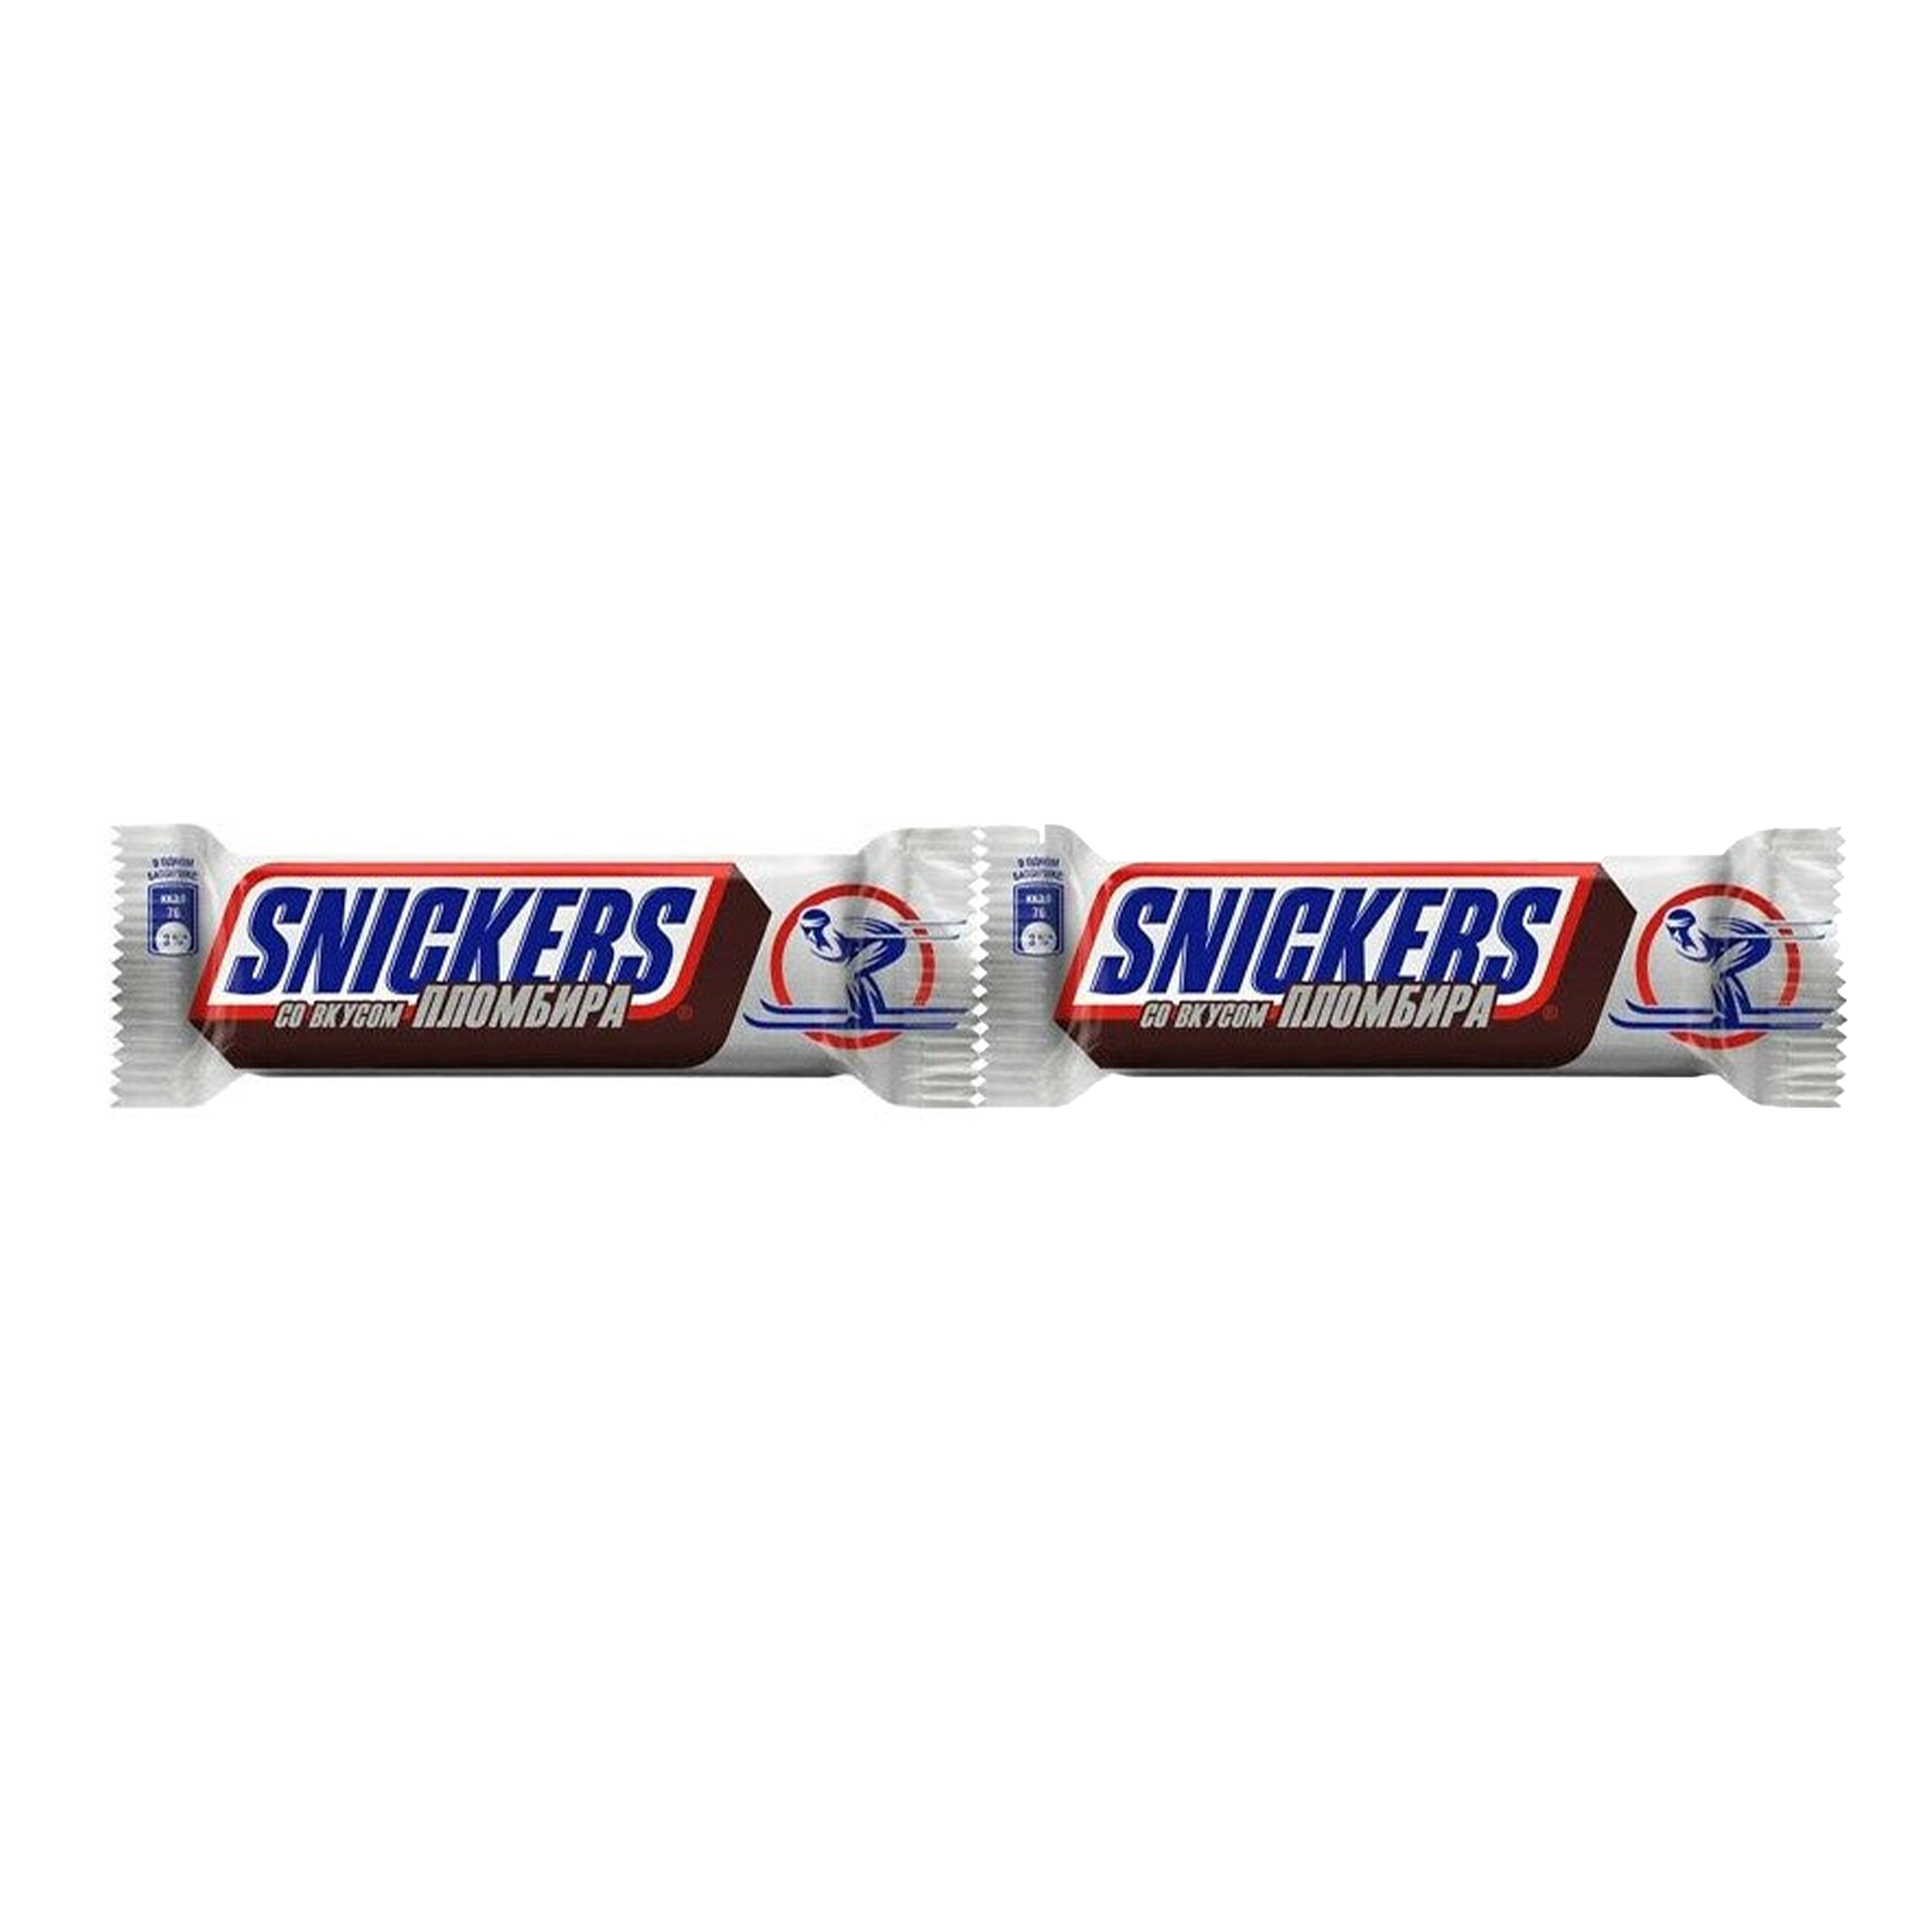 Snickers Ice Cream Sundae (EU)